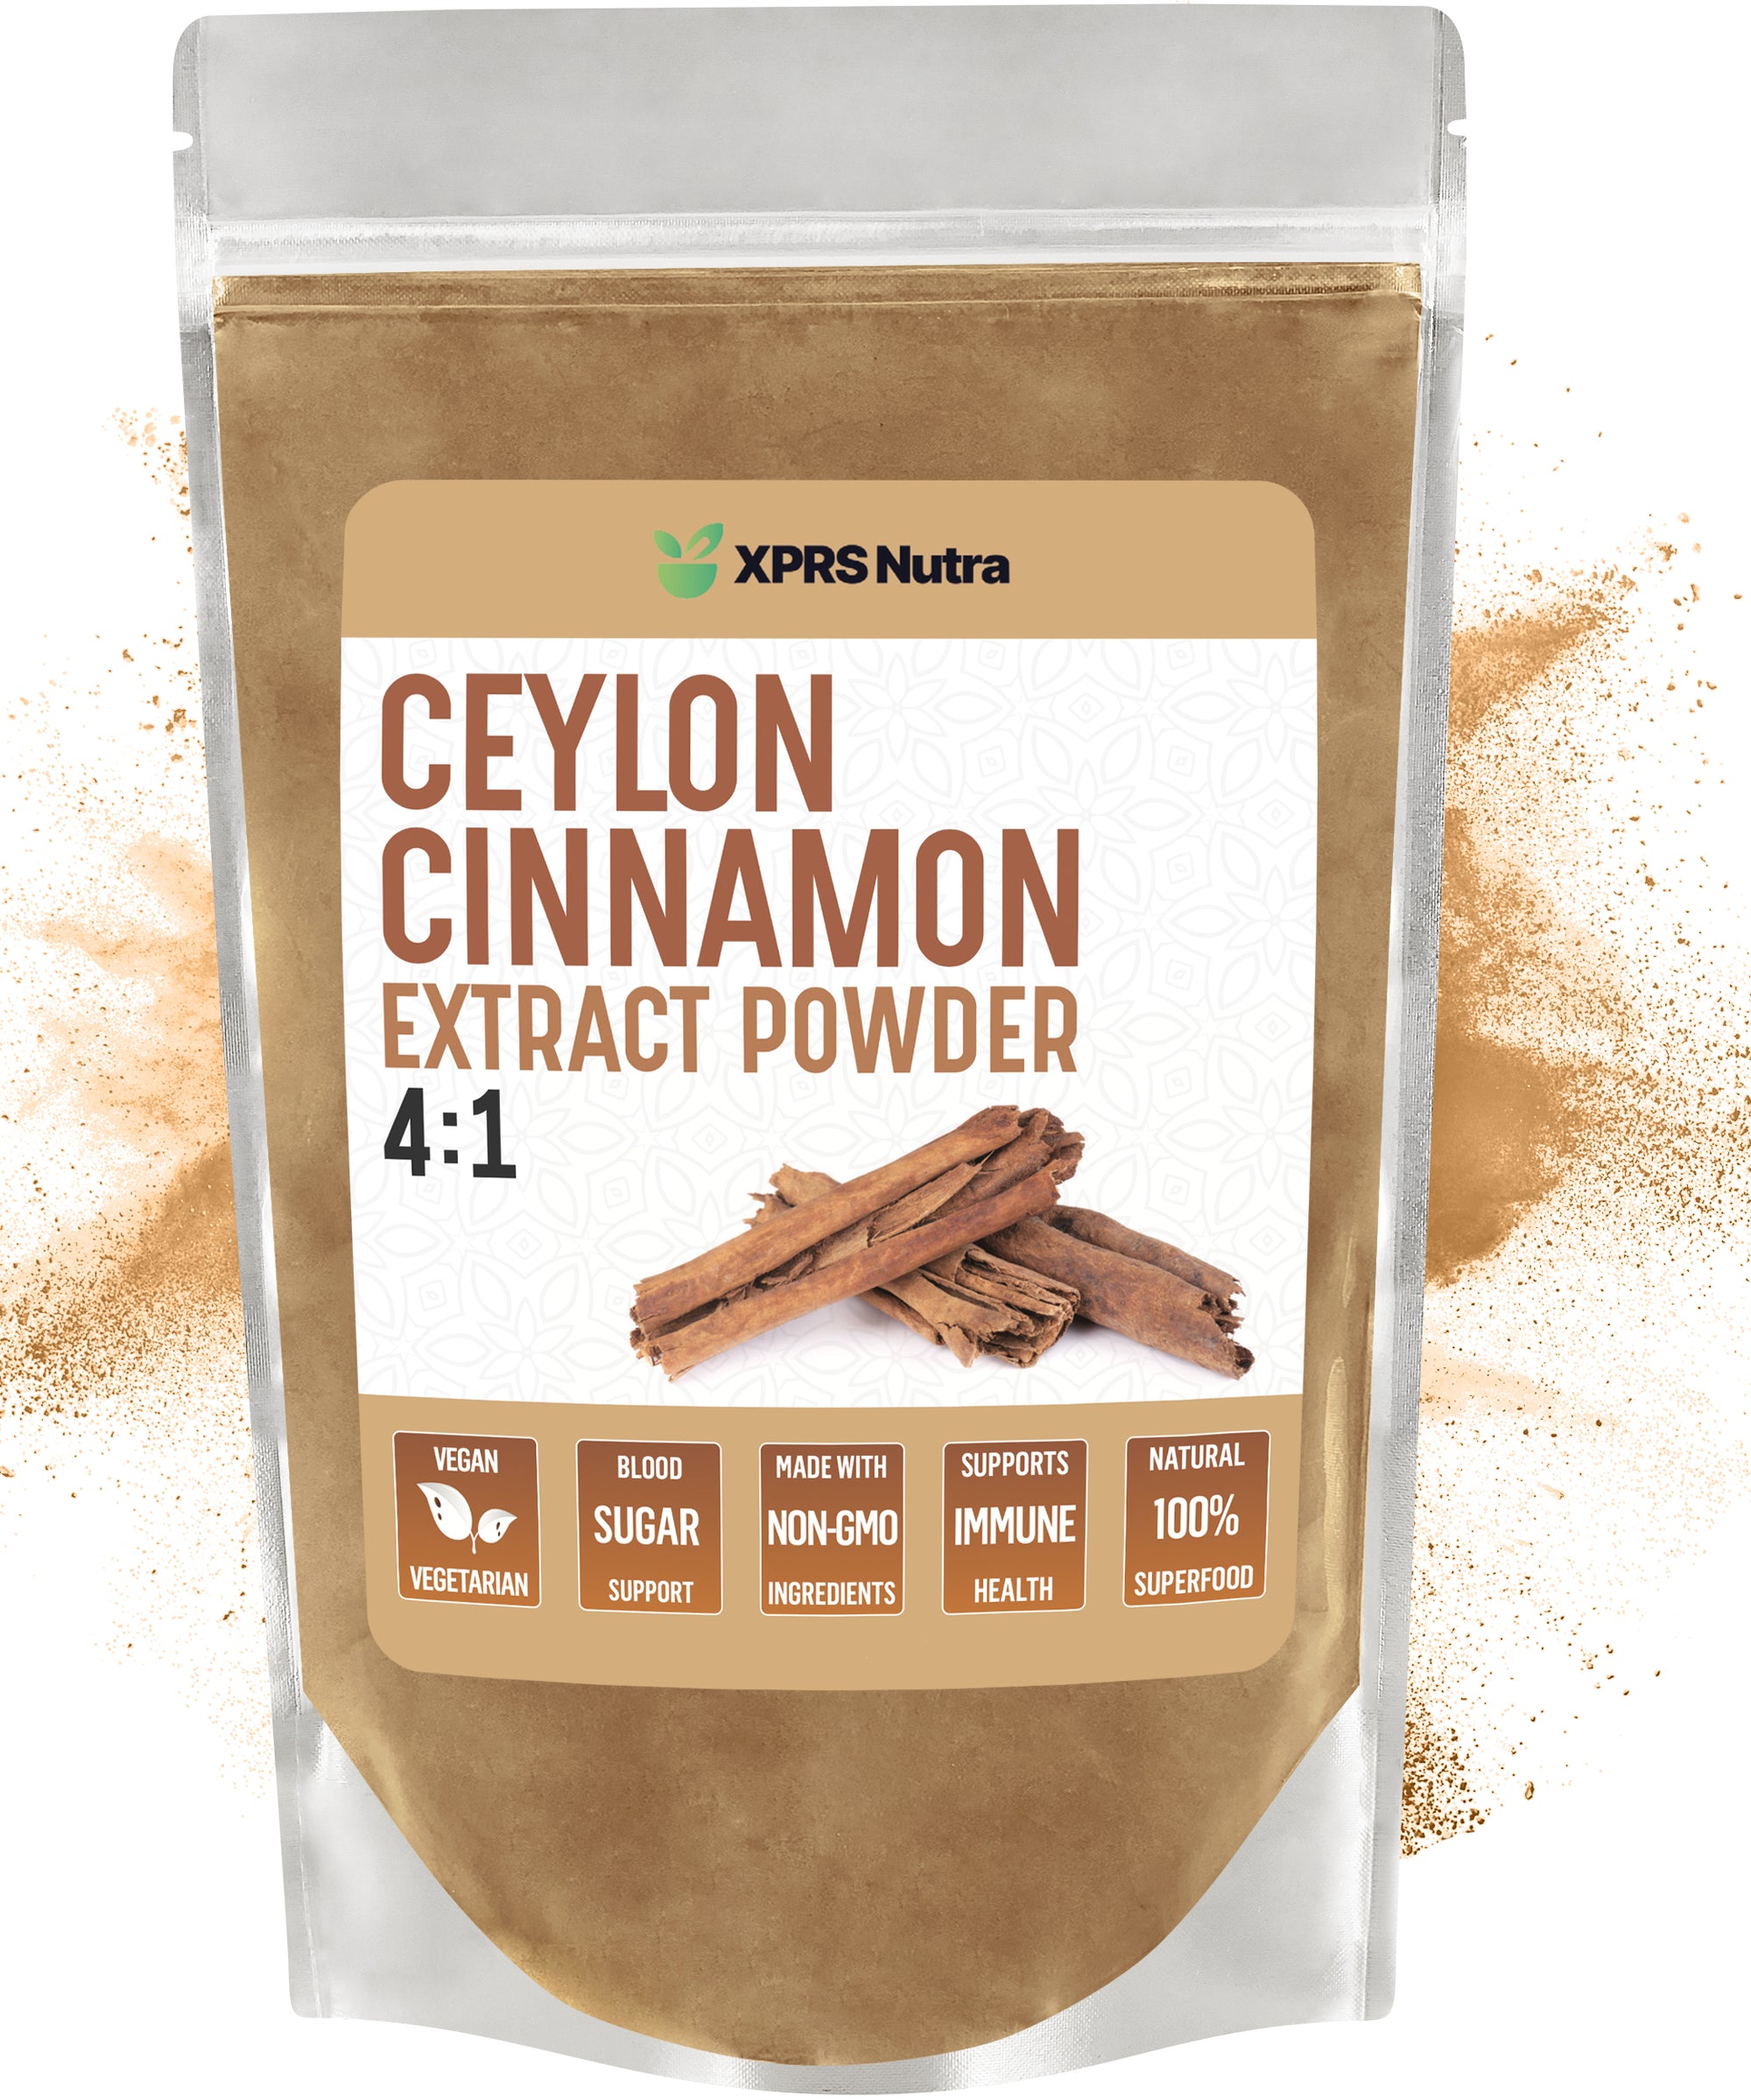 Ceylon Cinnamon Extract Powder 4:1